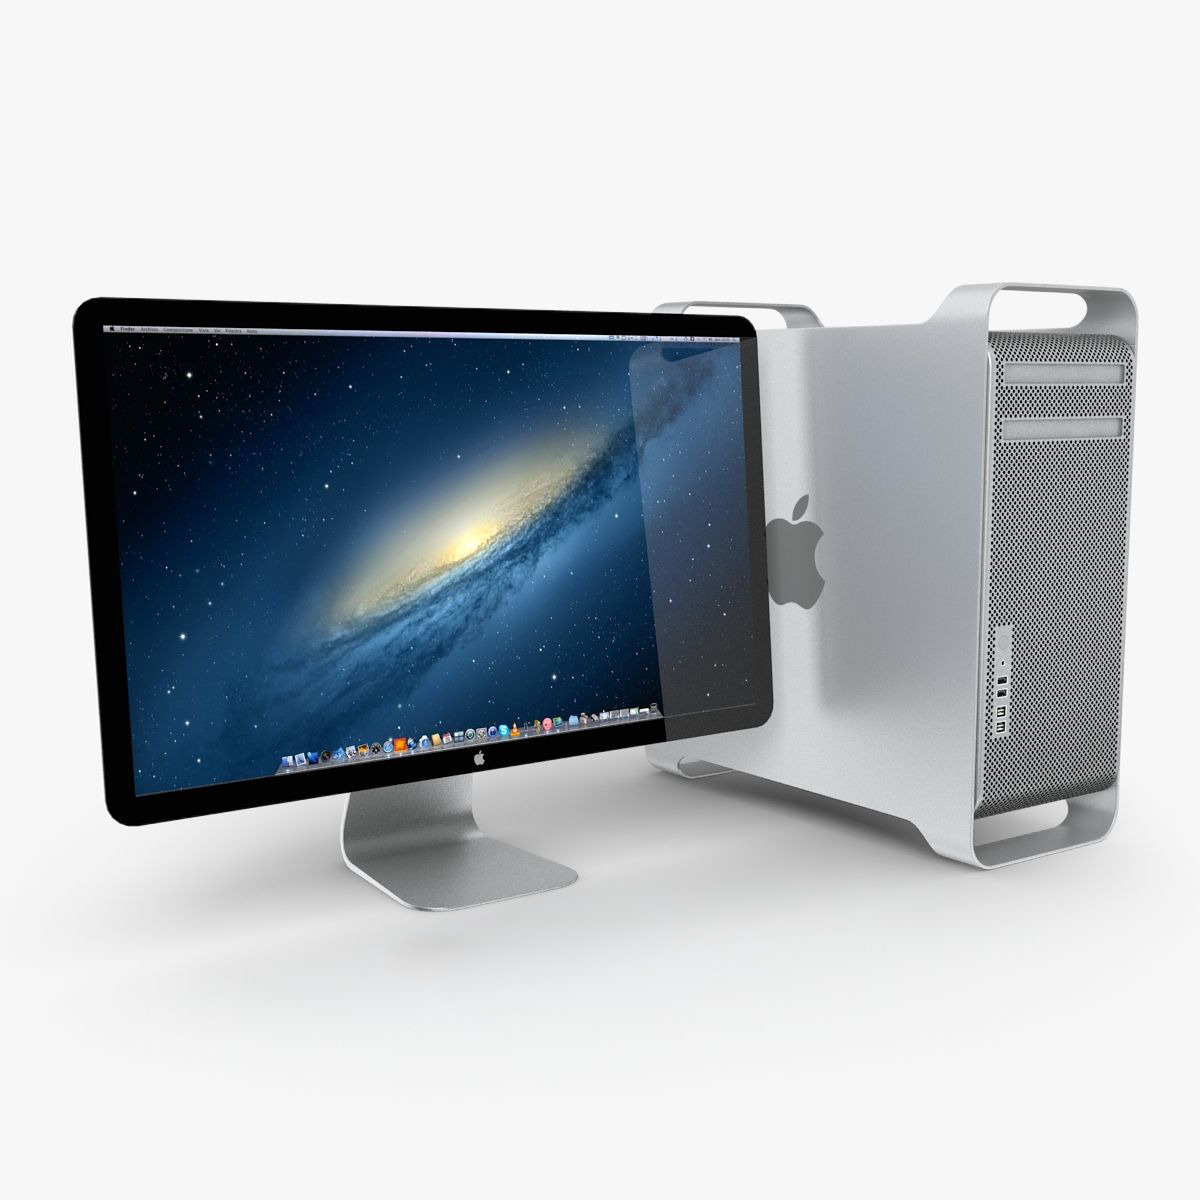 Apple Mac Pro A1289 3.33 GHz 6-Core Intel Xeon 32GB RAM 1TB HD w/Cinema Display